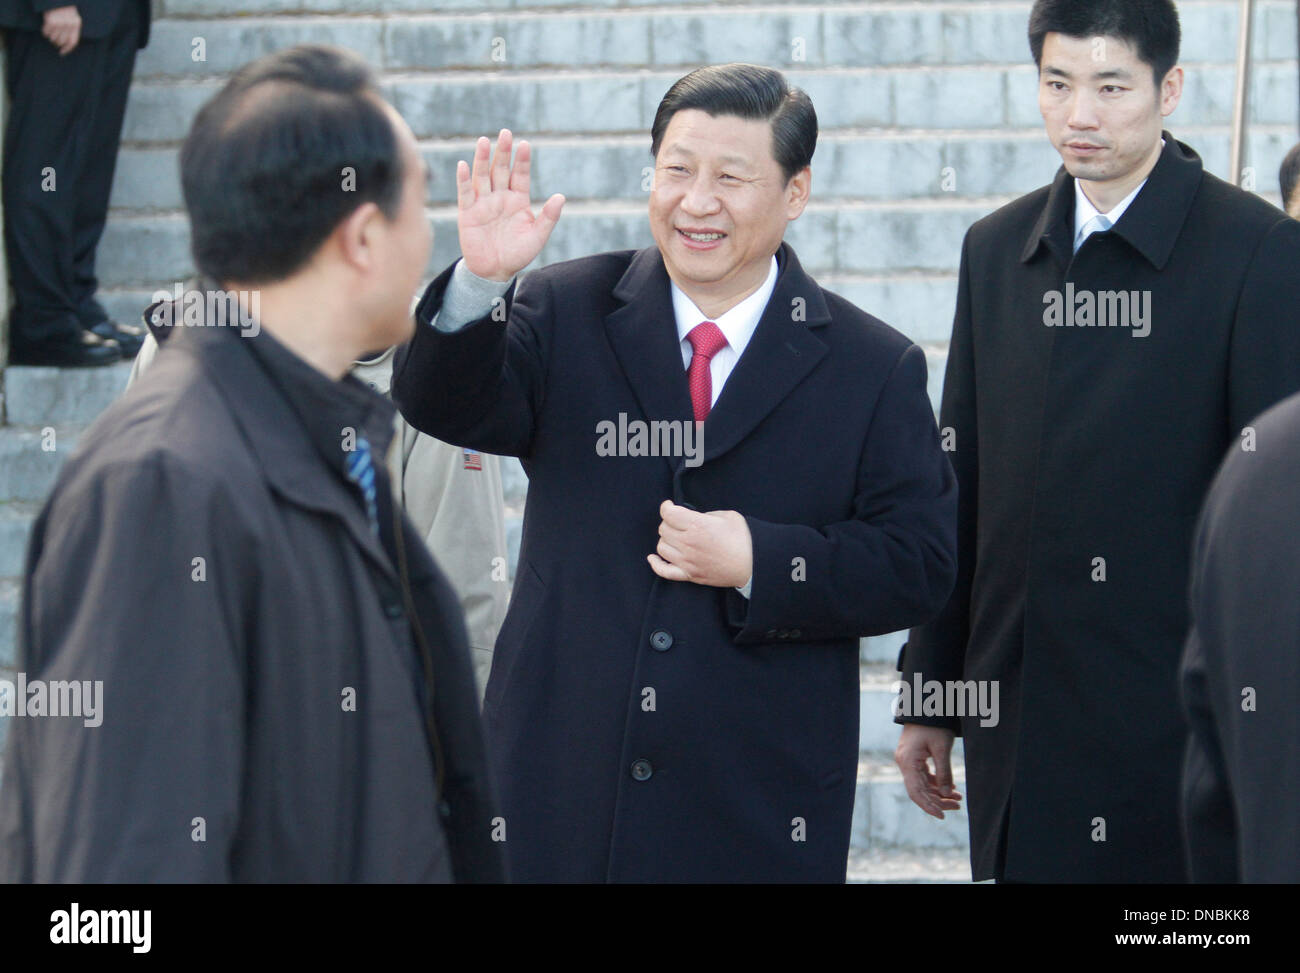 Primer ministro chino Xi Jinping visto durante una visita comercial a la isla española de Mallorca, España Foto de stock